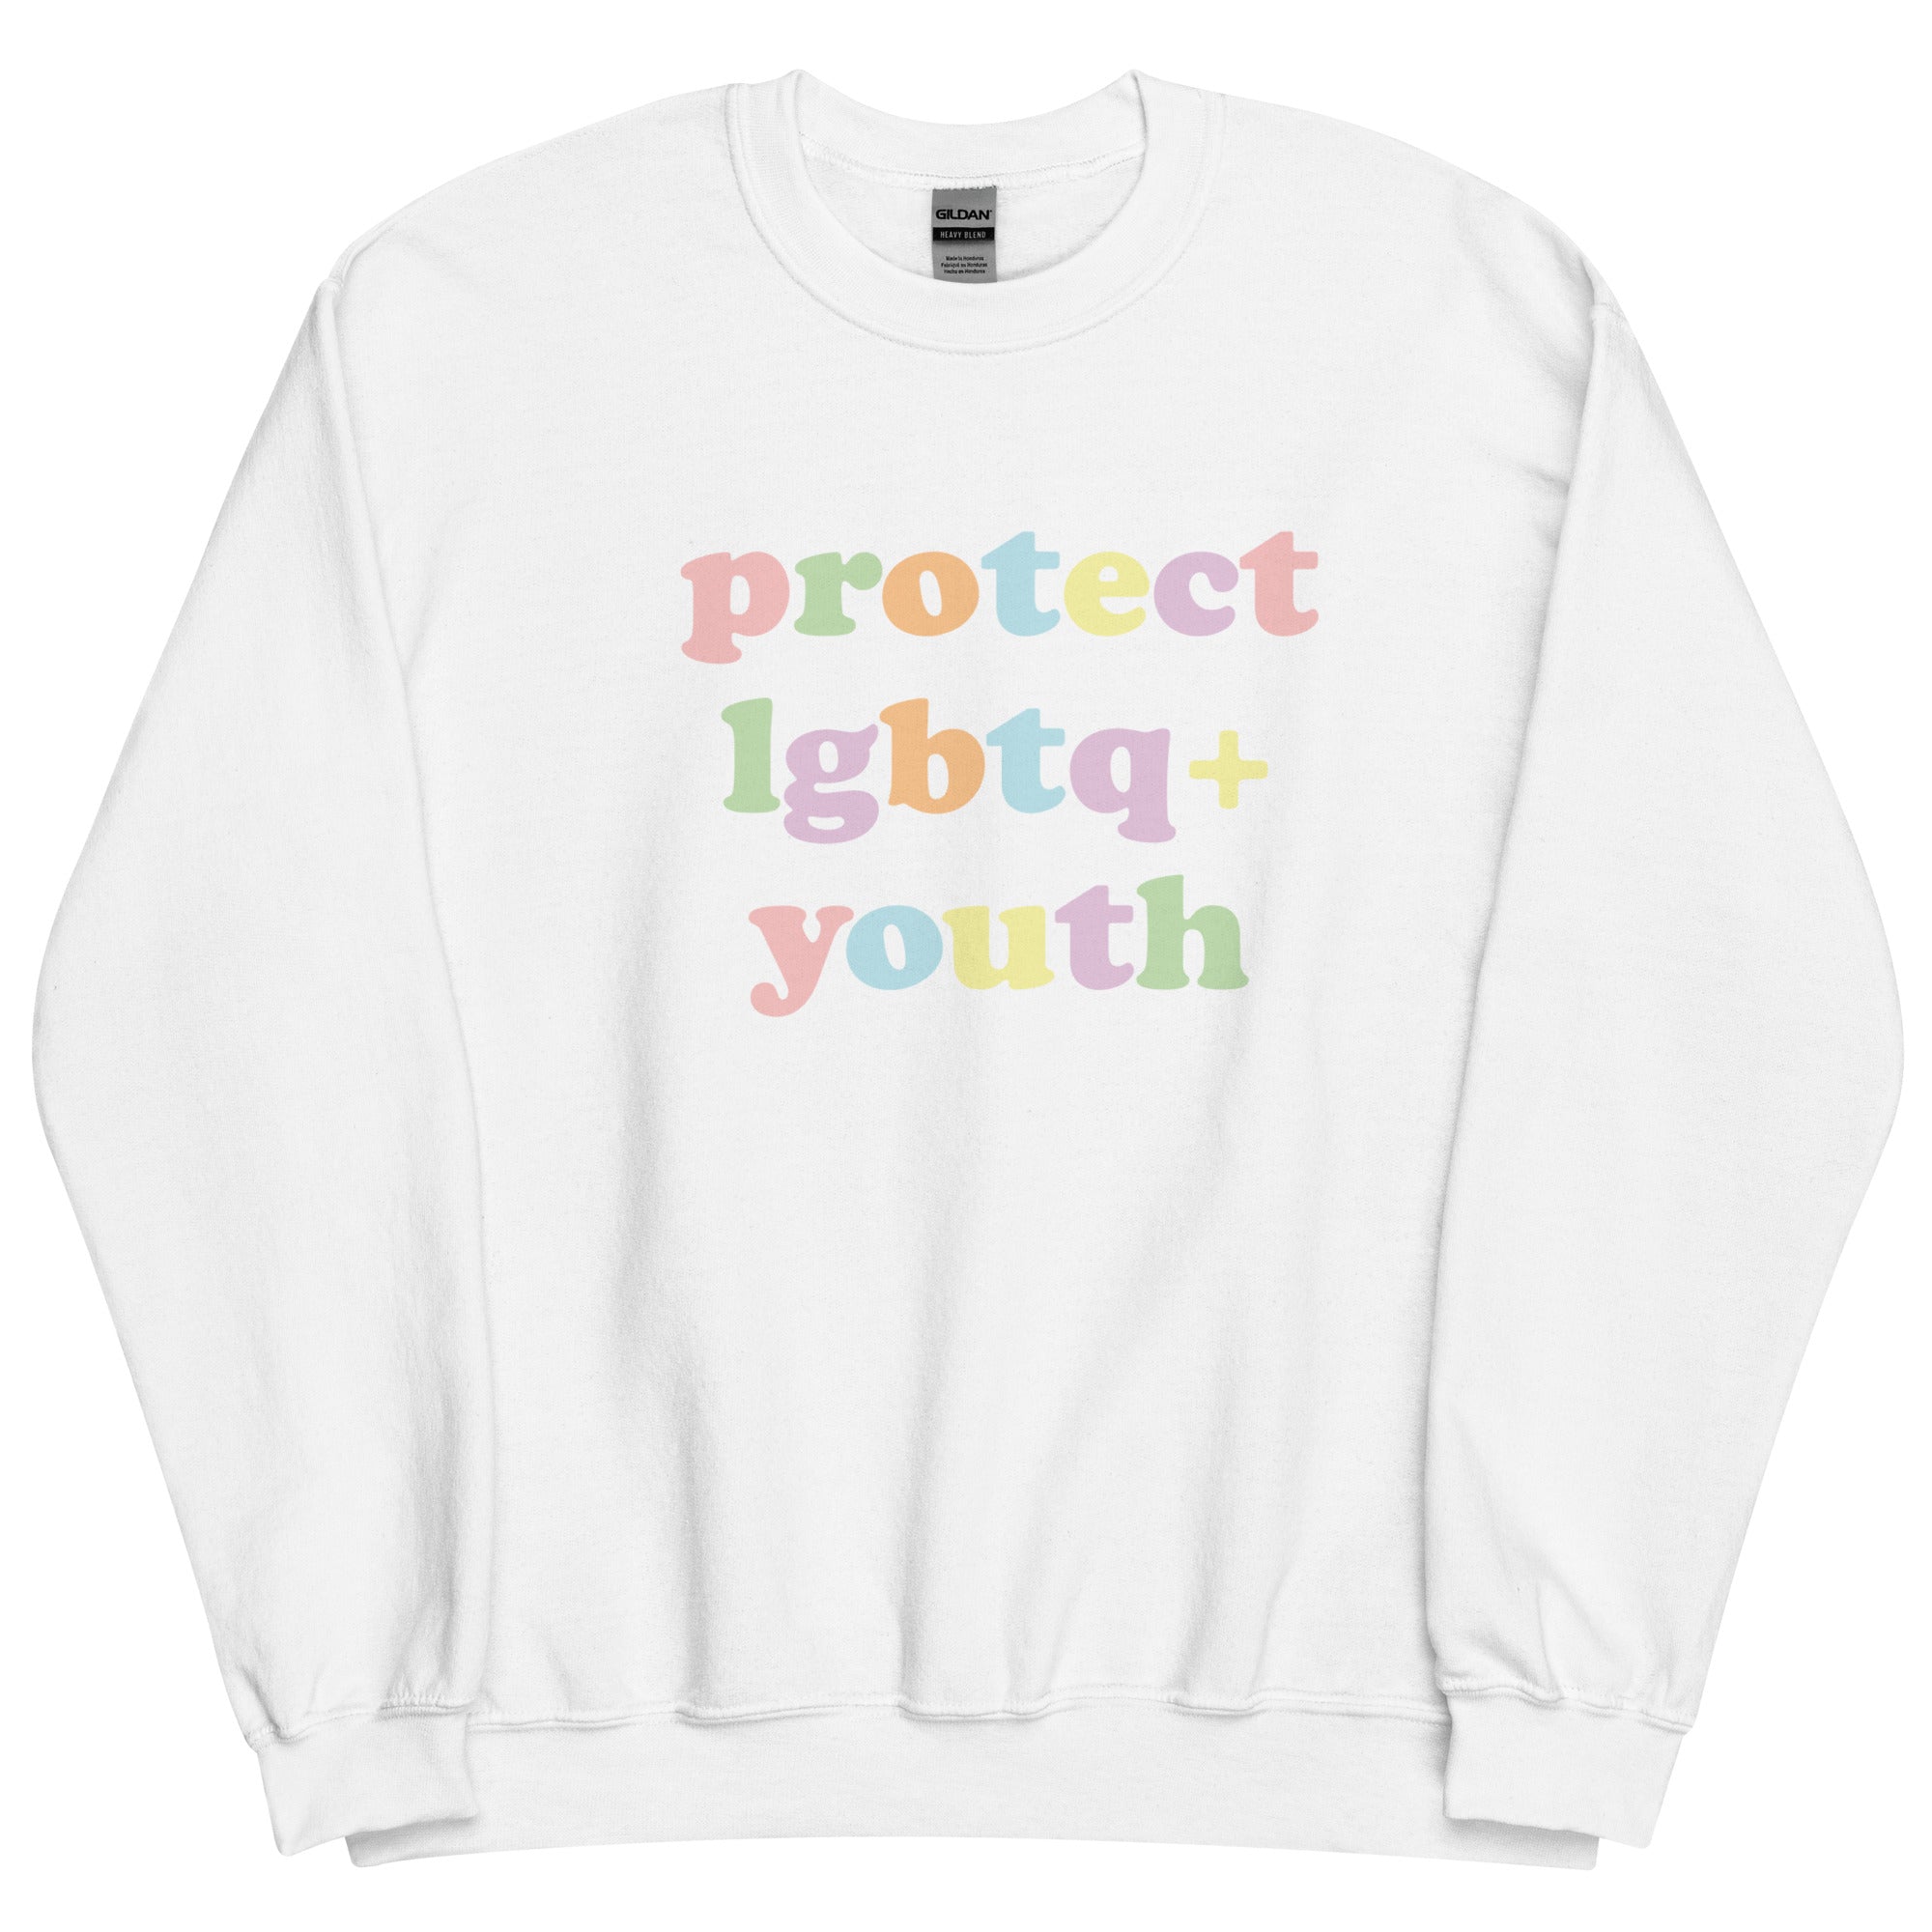 Protect LGBTQ+ Youth Crewneck